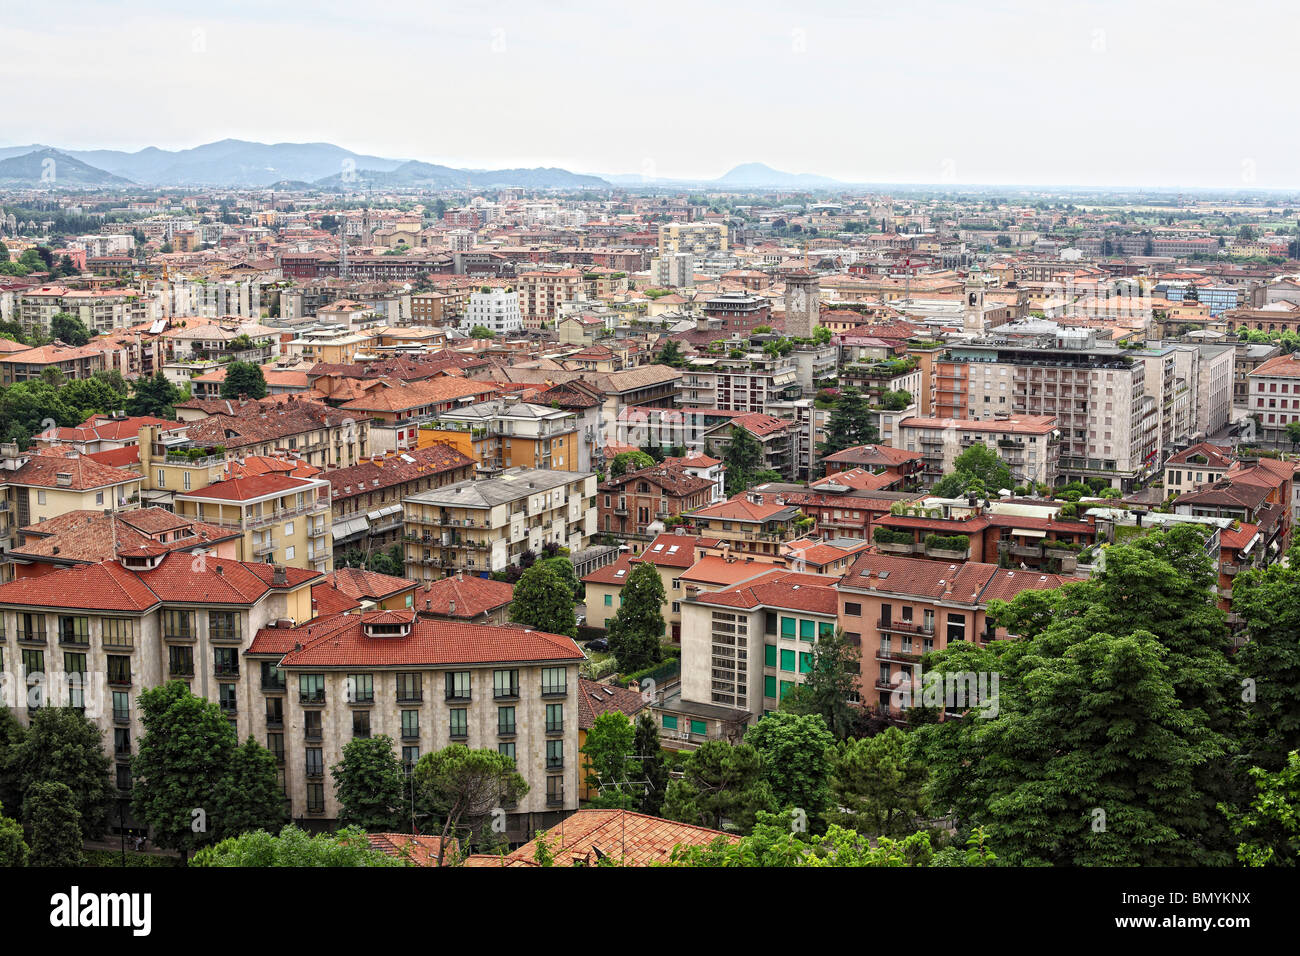 Vista de la ciudad italiana de Bergamo Foto de stock